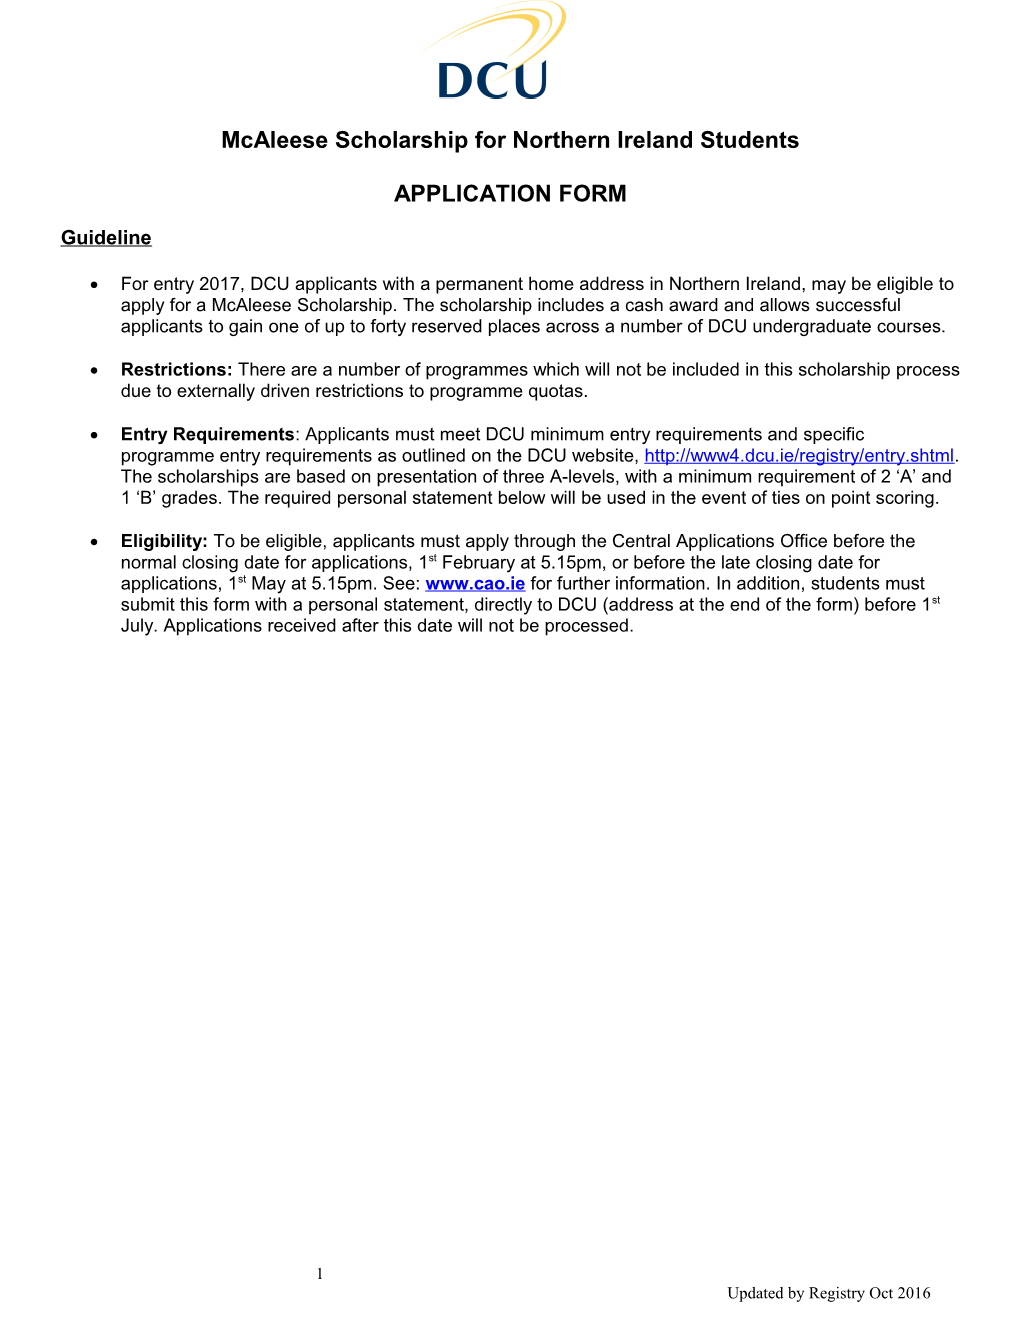 Postgraduate Studies Application Form